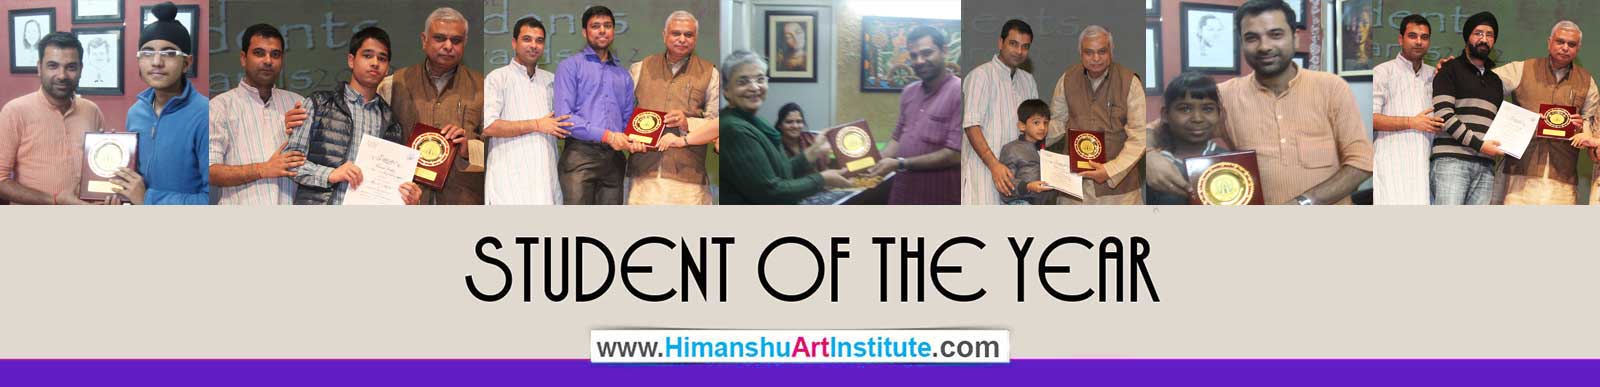 Vaishali Rastogi, Naveen Verma, Gurjeet Singh, Dr.Pratima Sharda, Bakshish Singh, Tushar Goyal, Rajbai, and Ojas Jain Awarded Student of the Year 2012